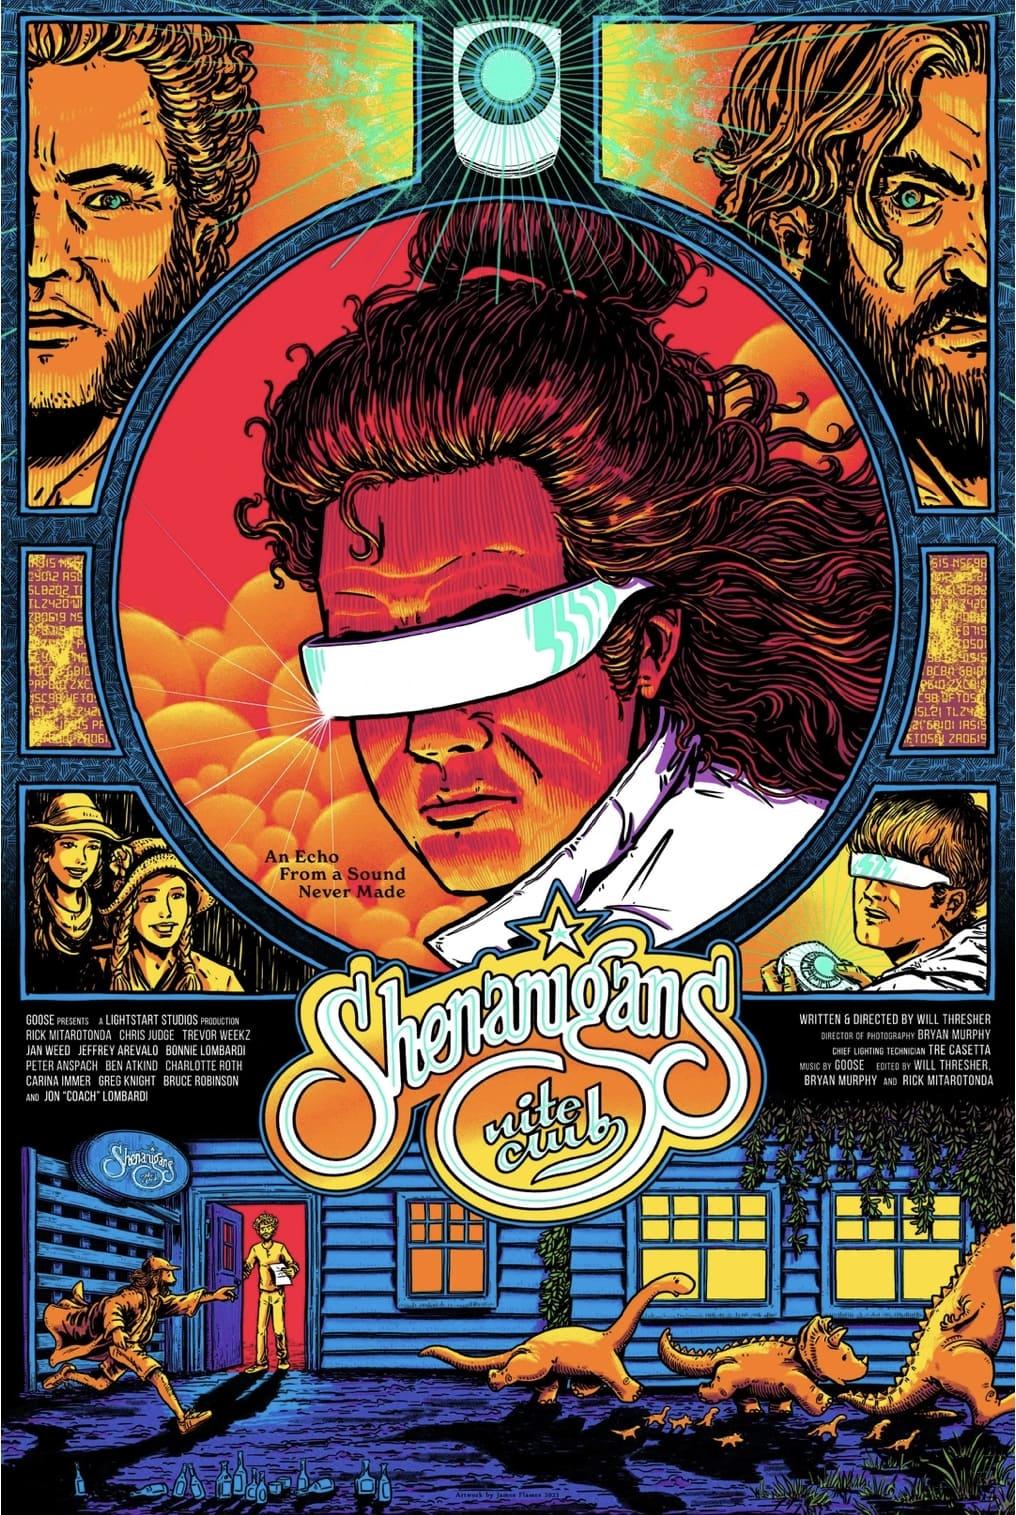 Shenanigans Nite Club: The Movie poster